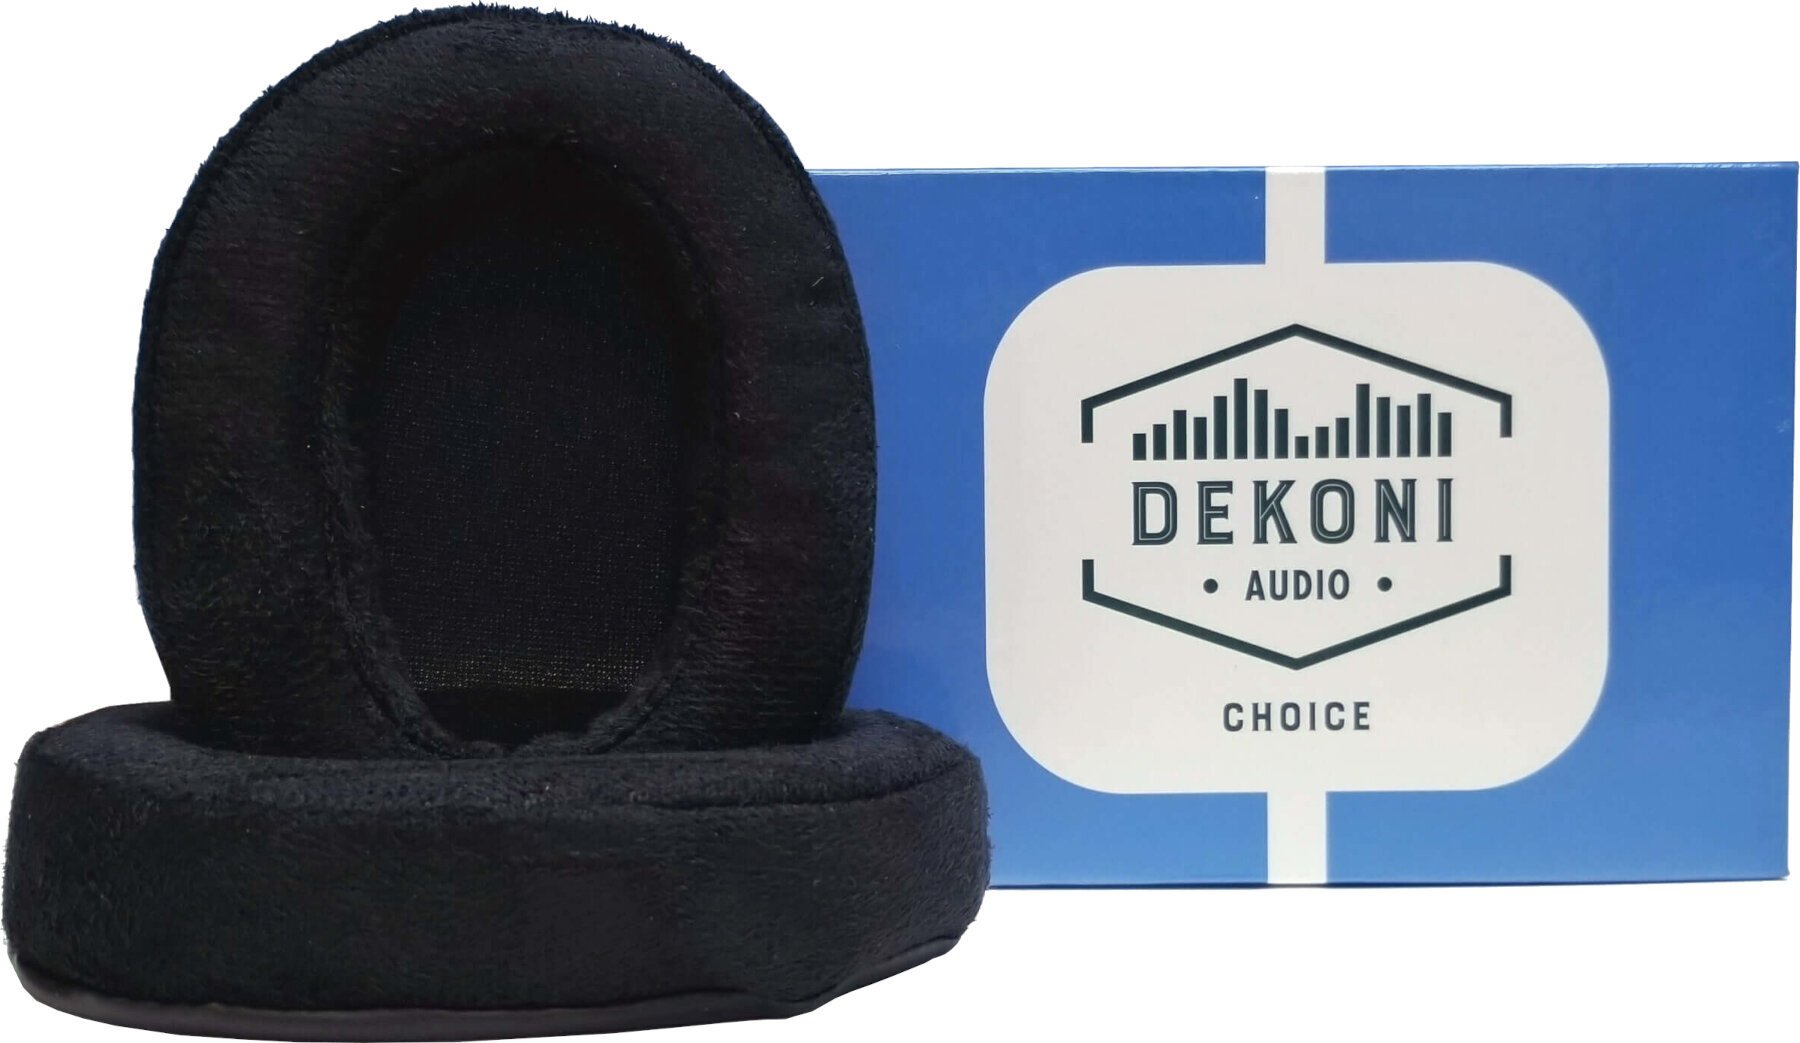 Ohrpolster für Kopfhörer Dekoni Audio EPZ-K371-CHS Ohrpolster für Kopfhörer Schwarz